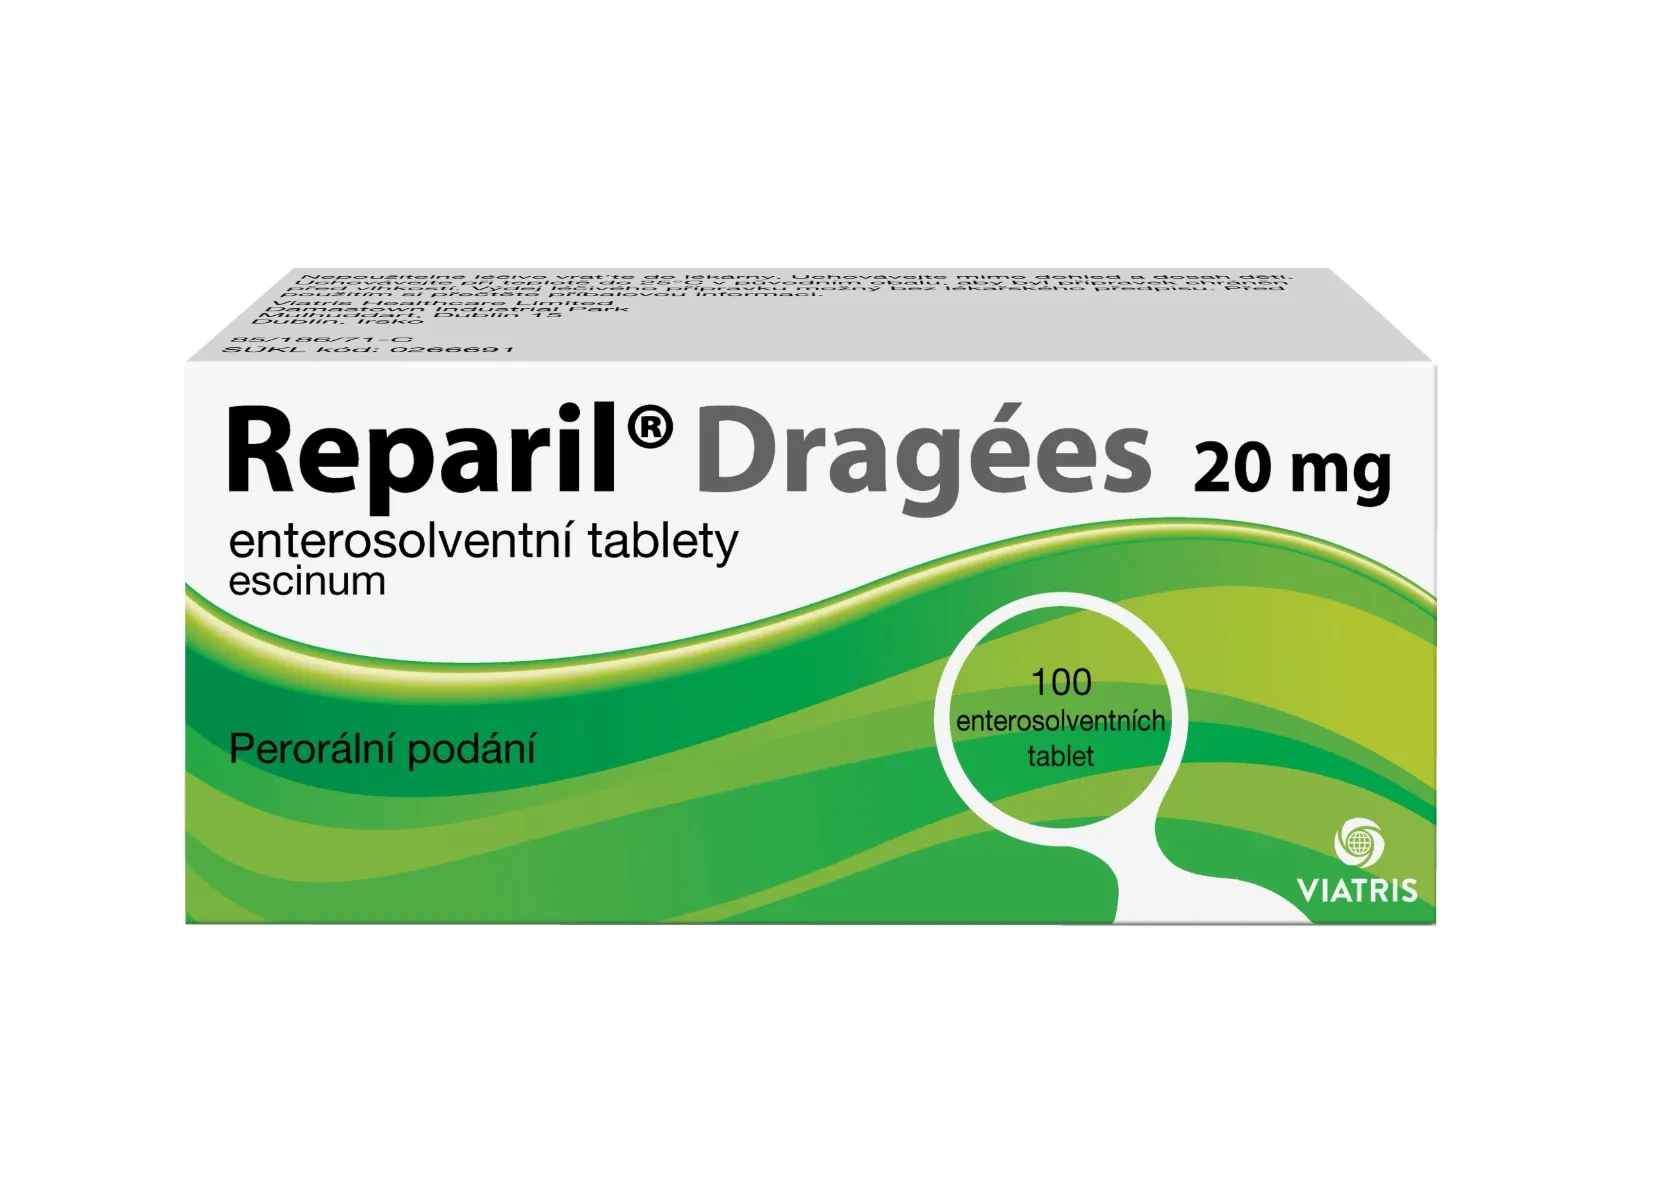 Reparil Dragées 20 mg 100 tablet